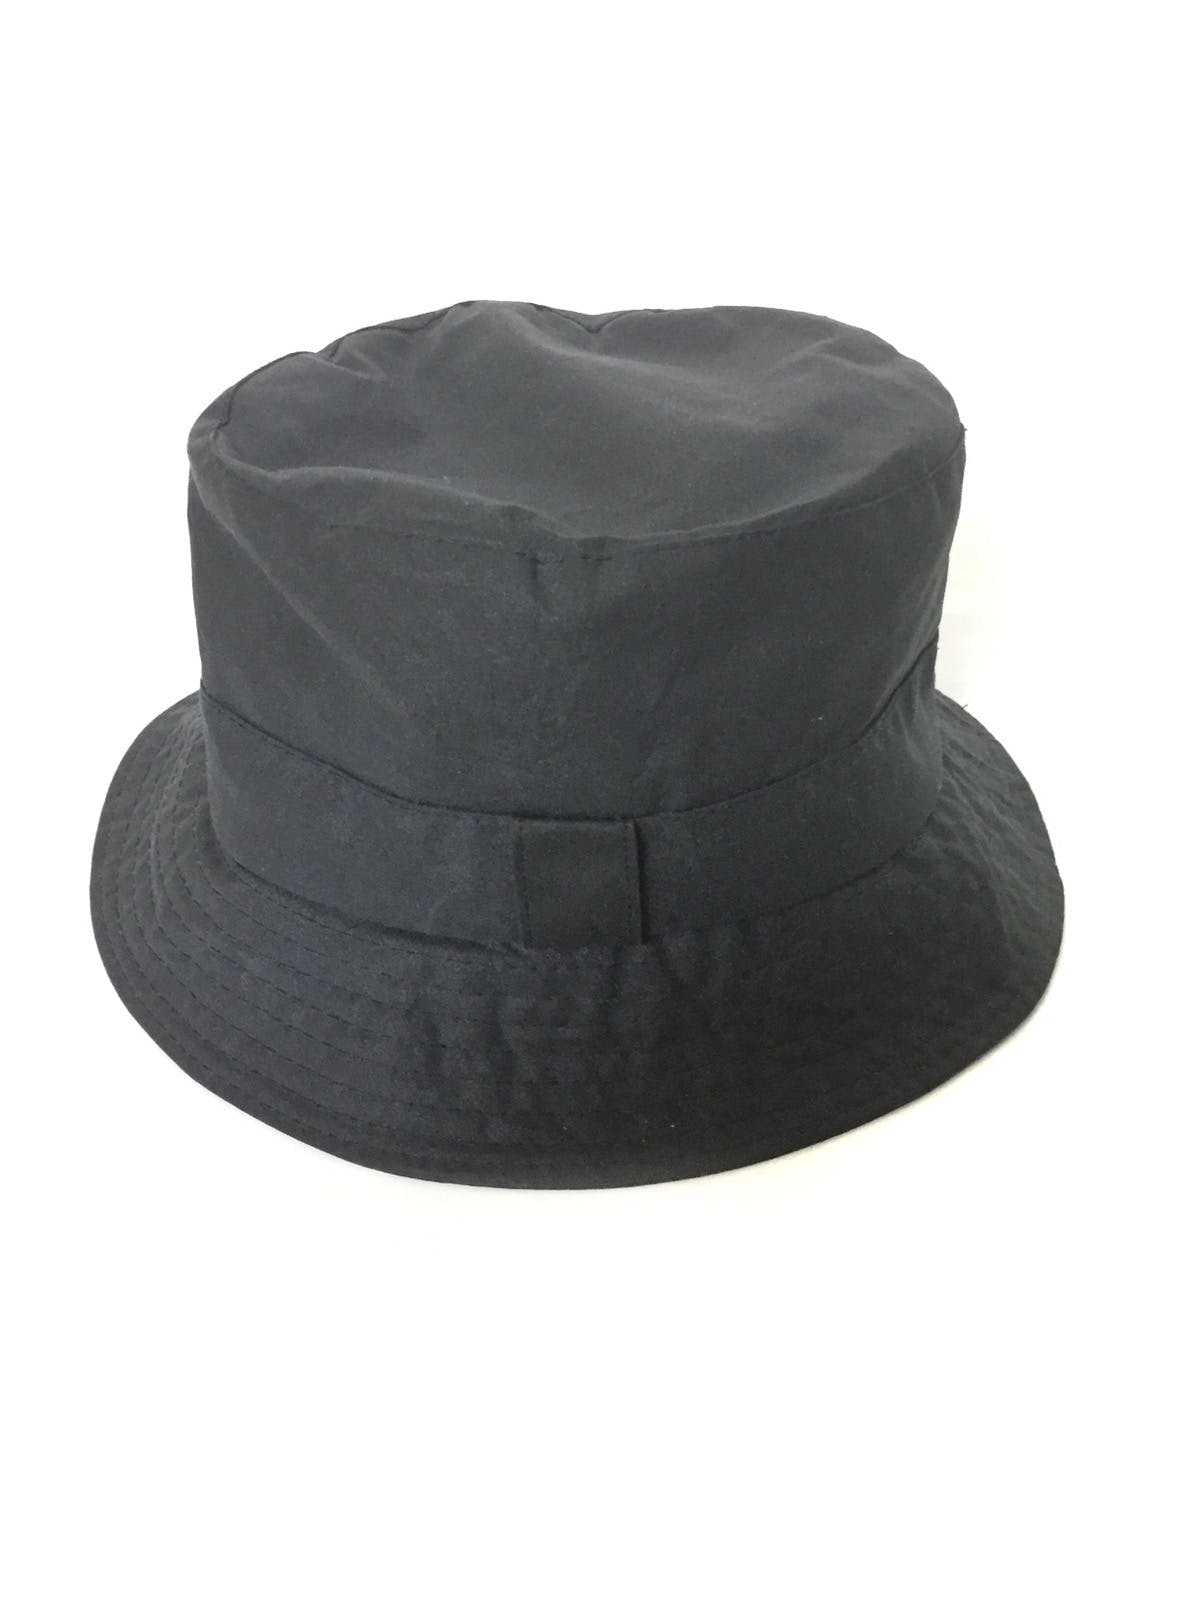 Barbour international wax bucket hat xl size - 2